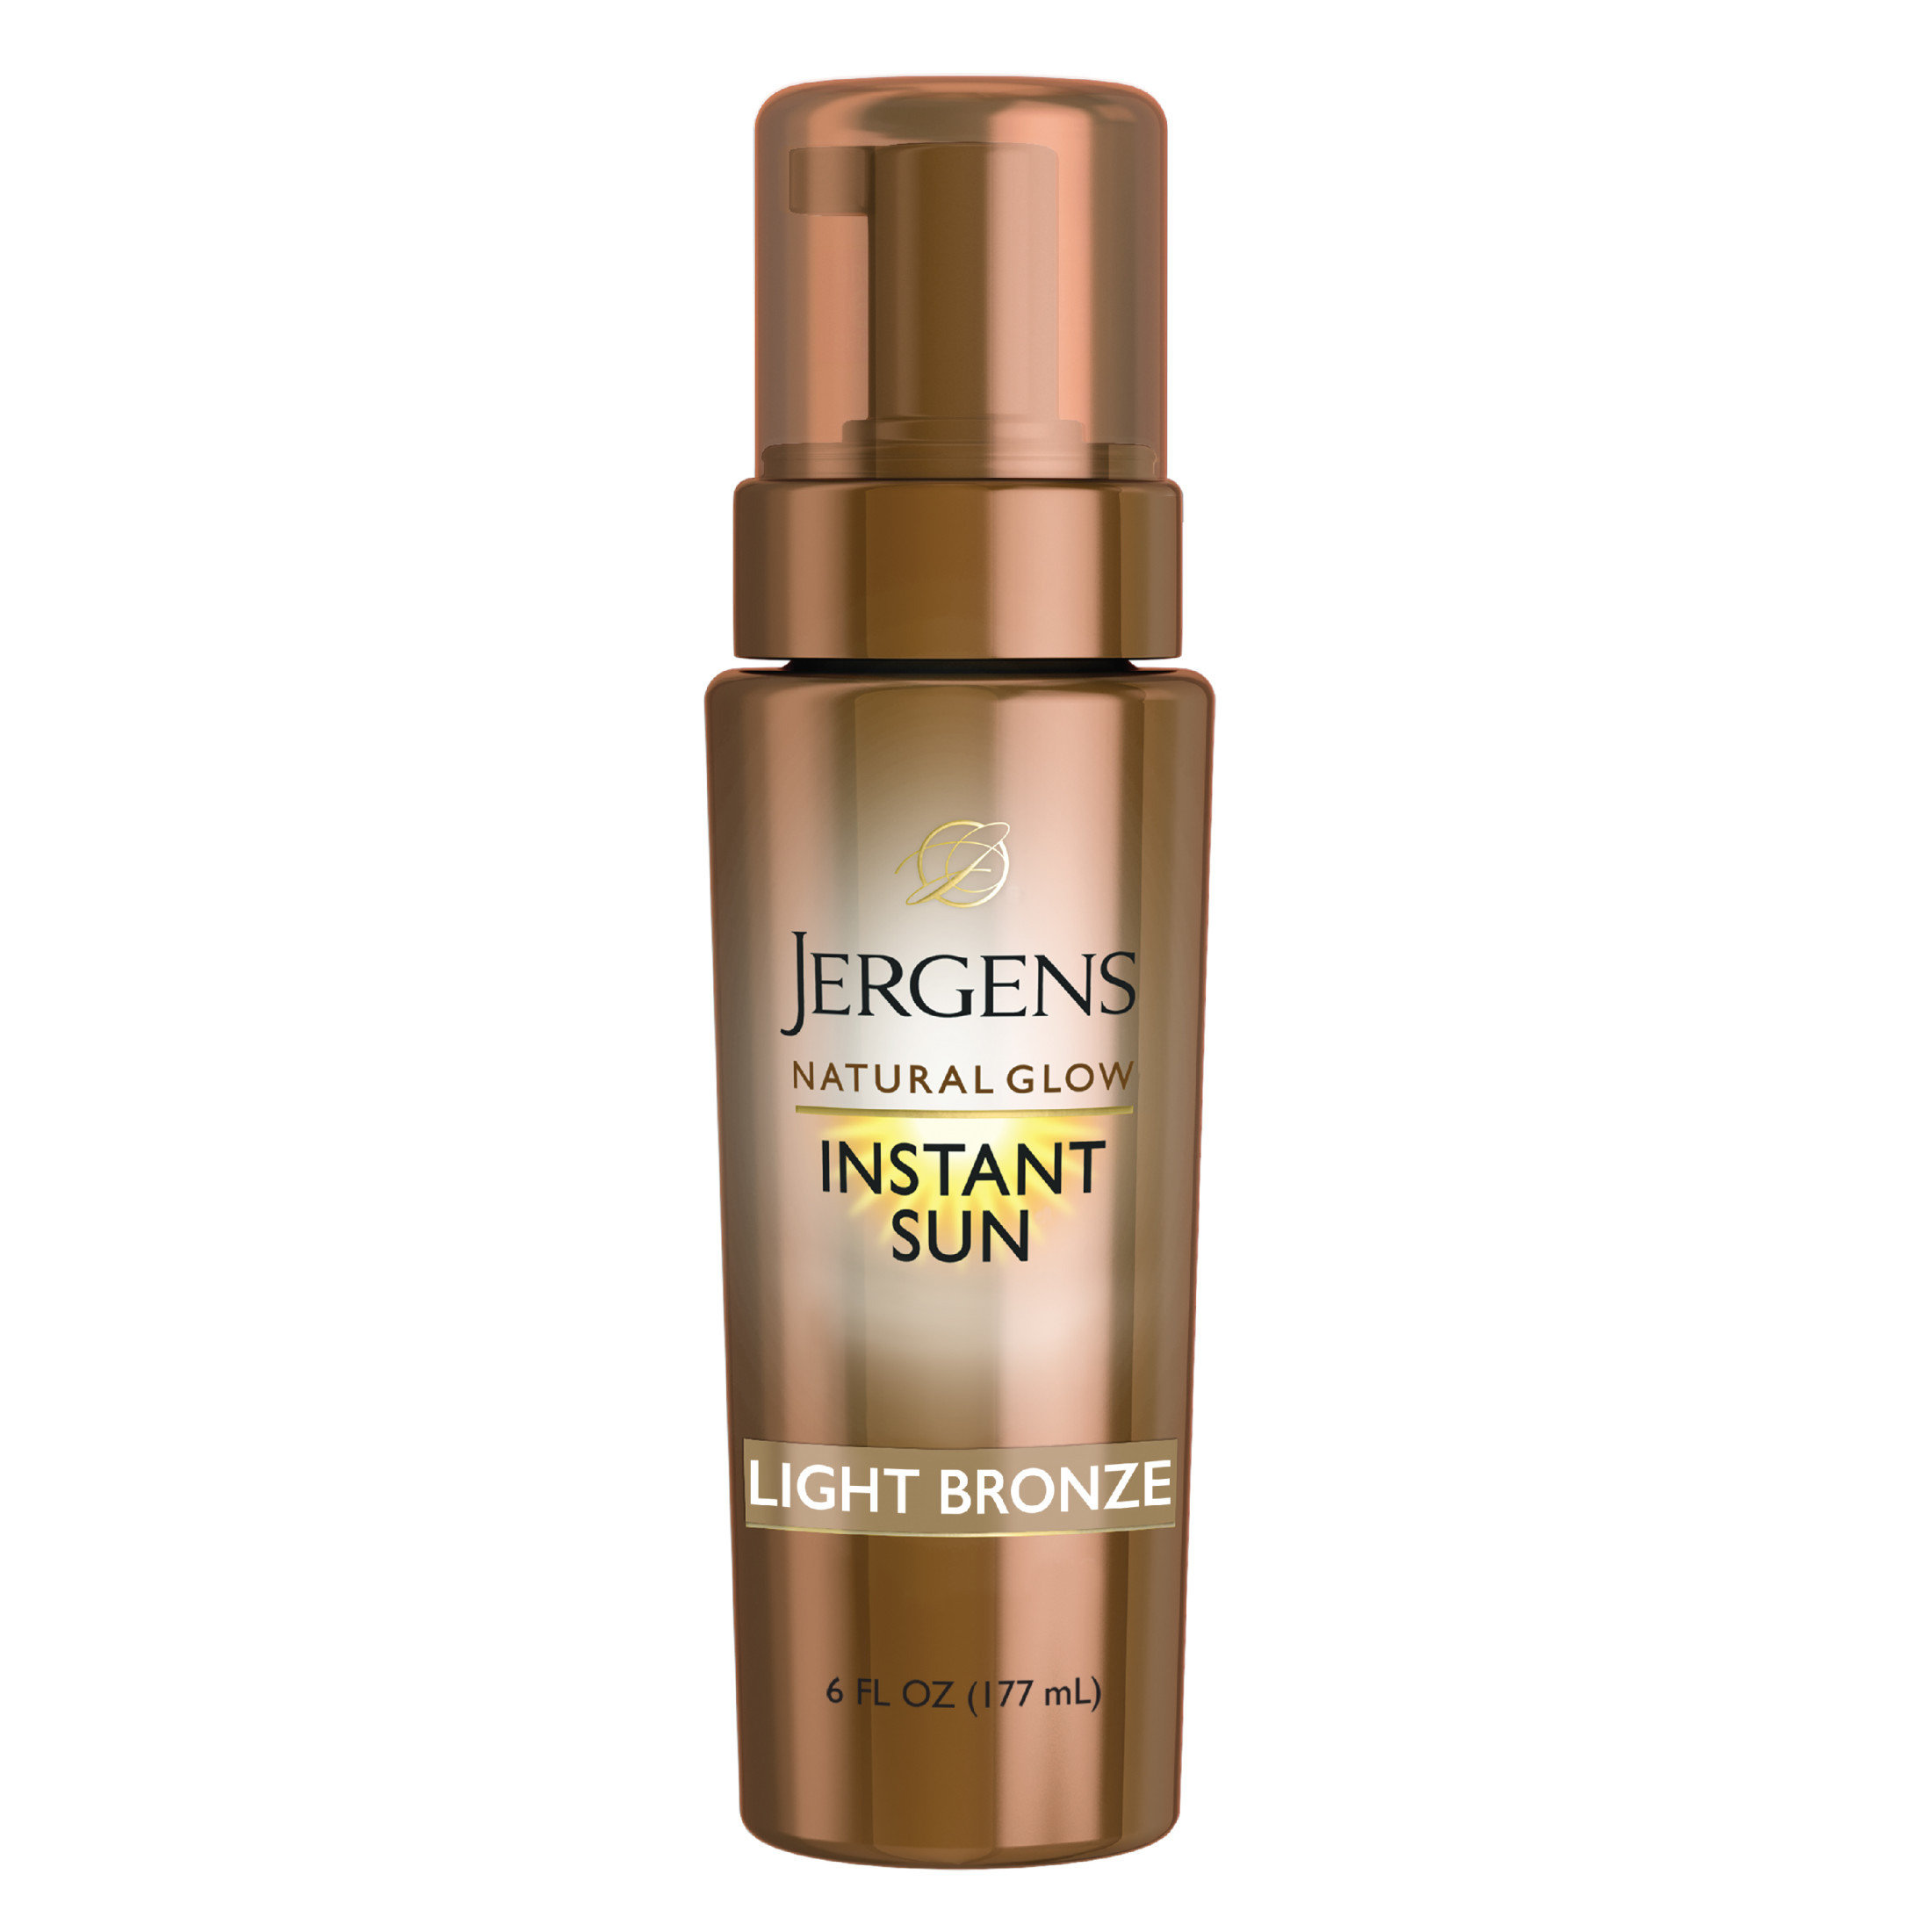 Jergens Natural Glow Instant Sun Sunless Tanning Mousse, Light Bronze, 6 fl oz - image 1 of 10